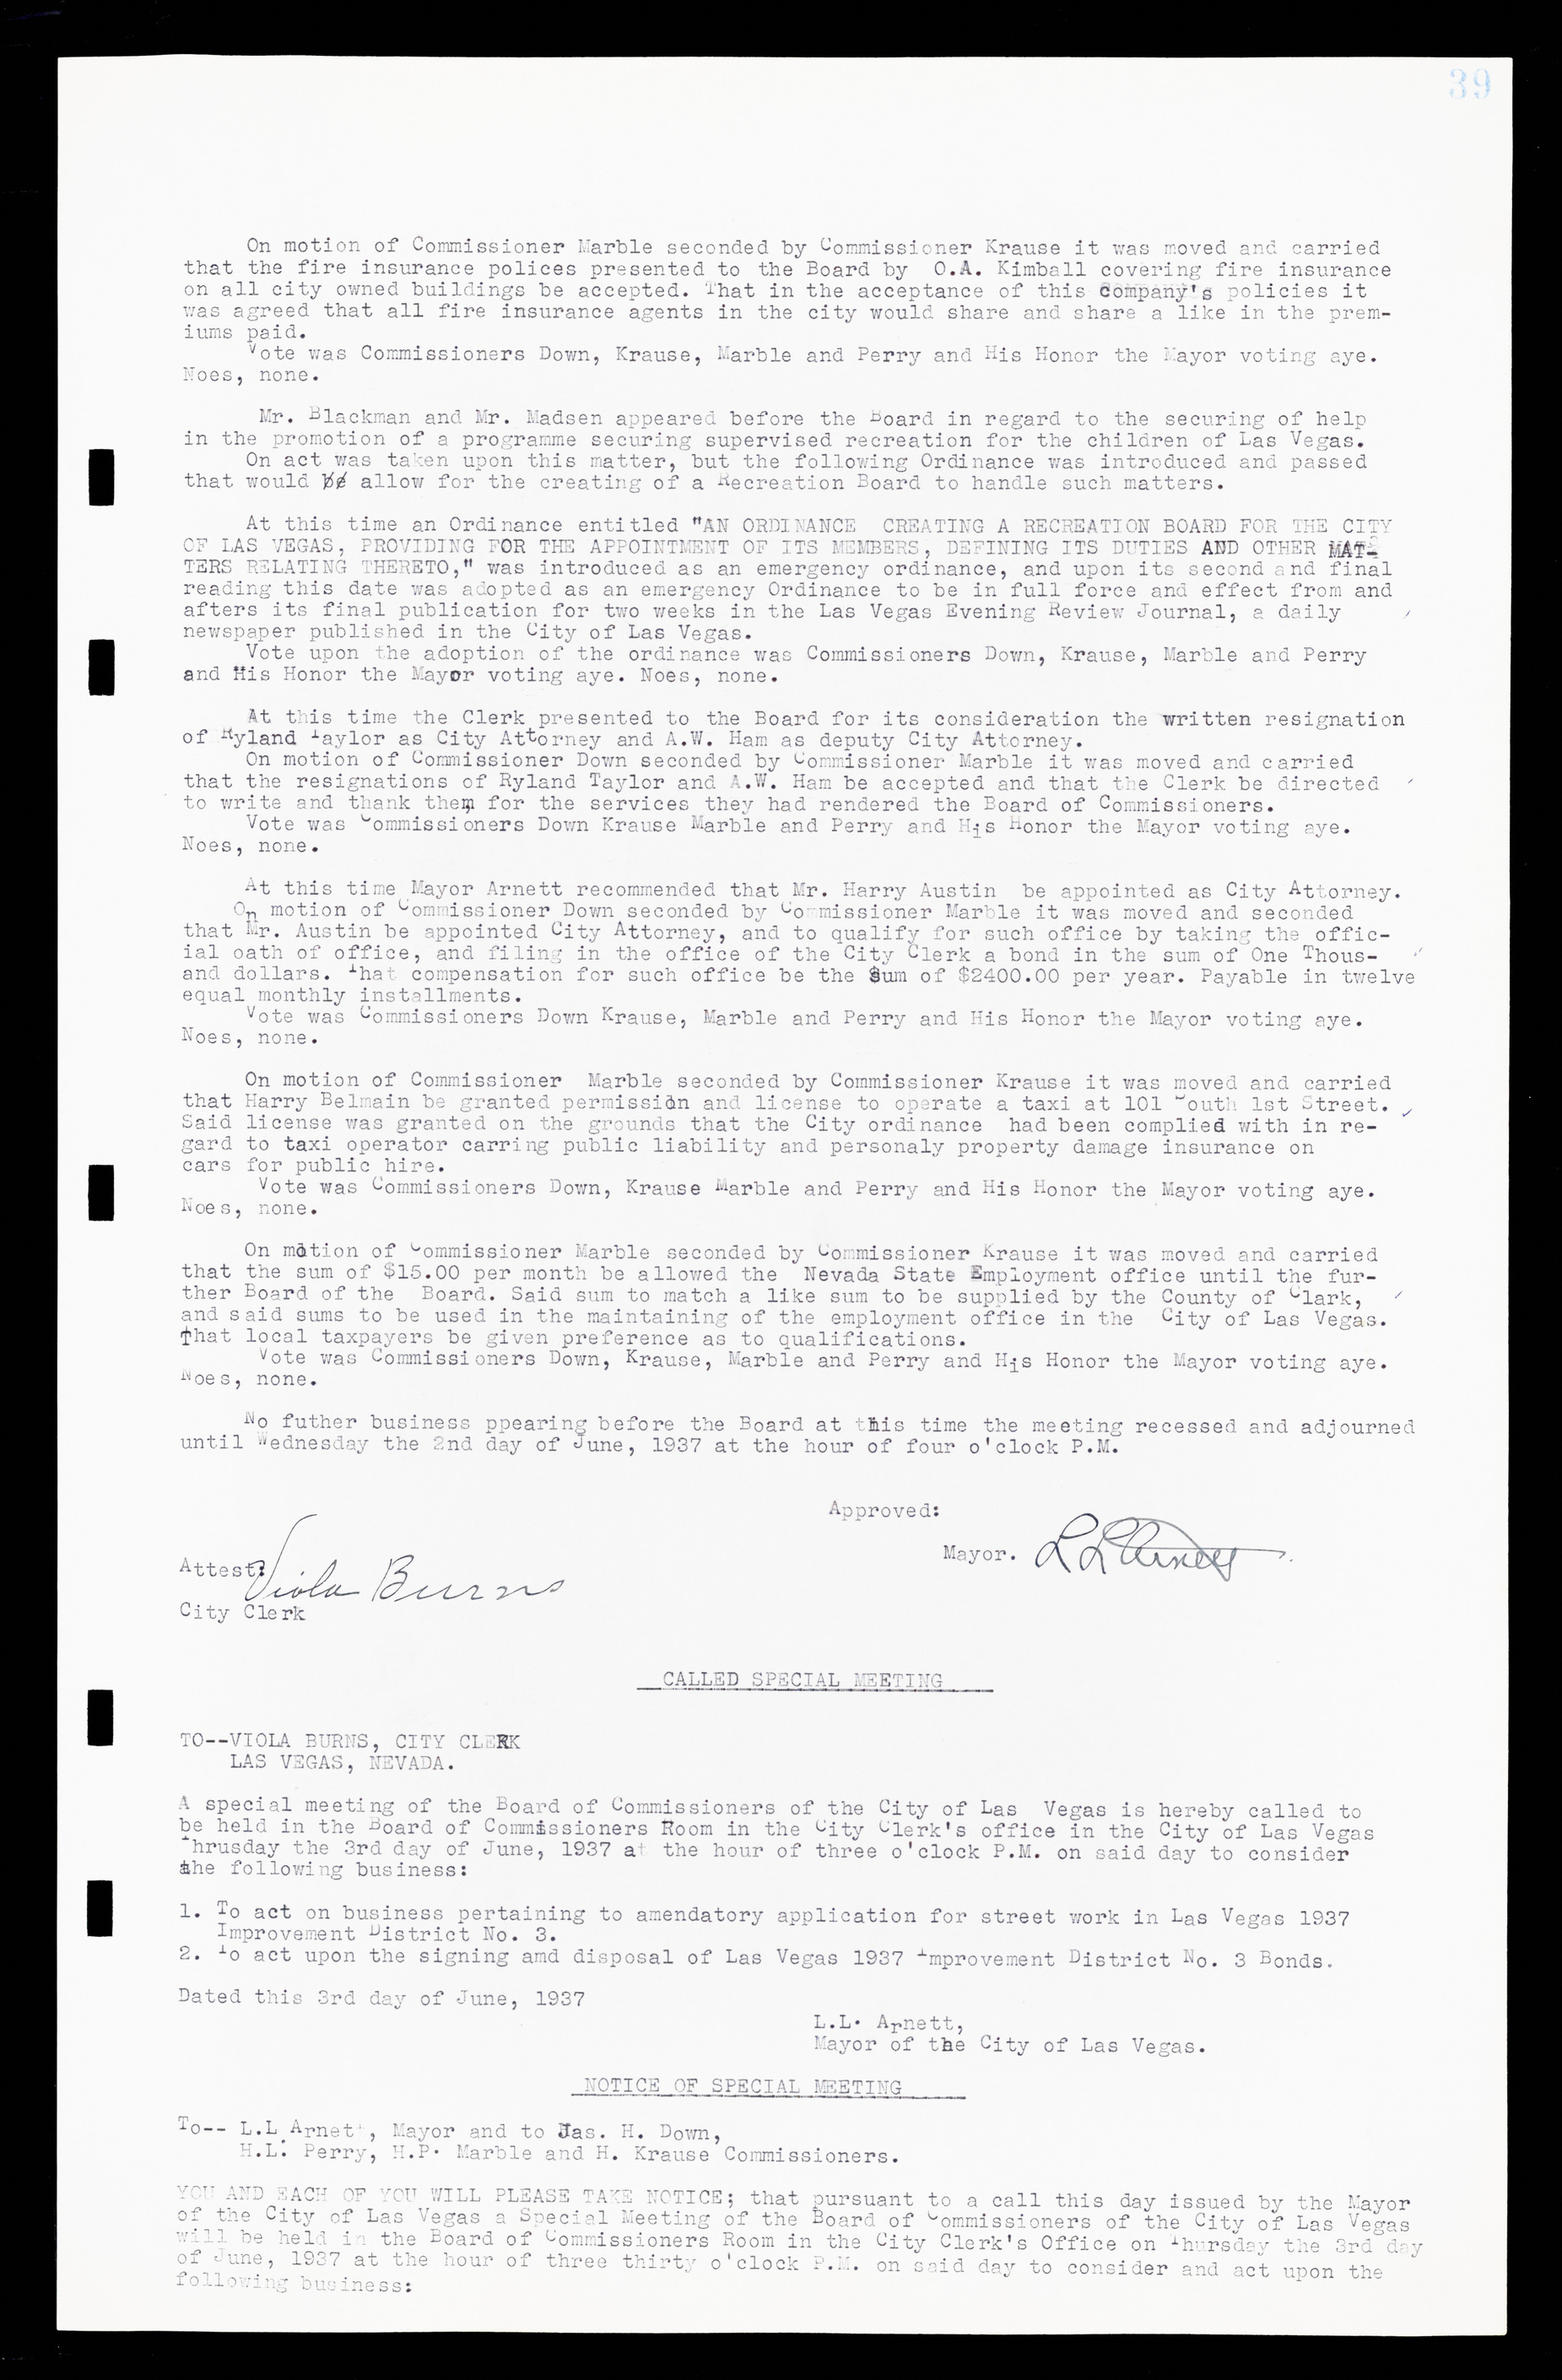 Las Vegas City Commission Minutes, February 17, 1937 to August 4, 1942, lvc000004-45